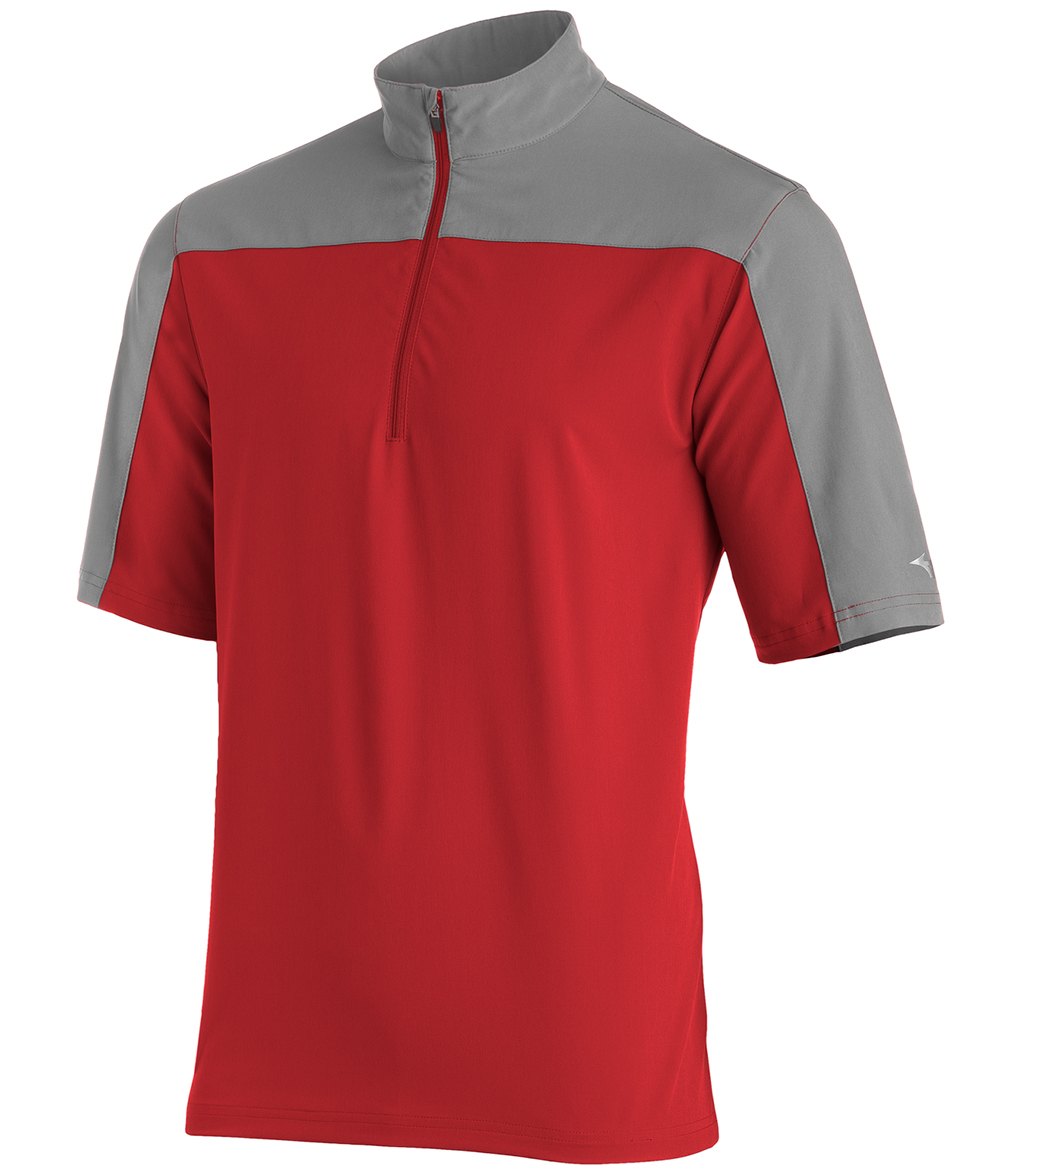 Mizuno Boys' Comp Short Sleeve Batting Jacket - Red-Grey Medium Red/Grey - Swimoutlet.com